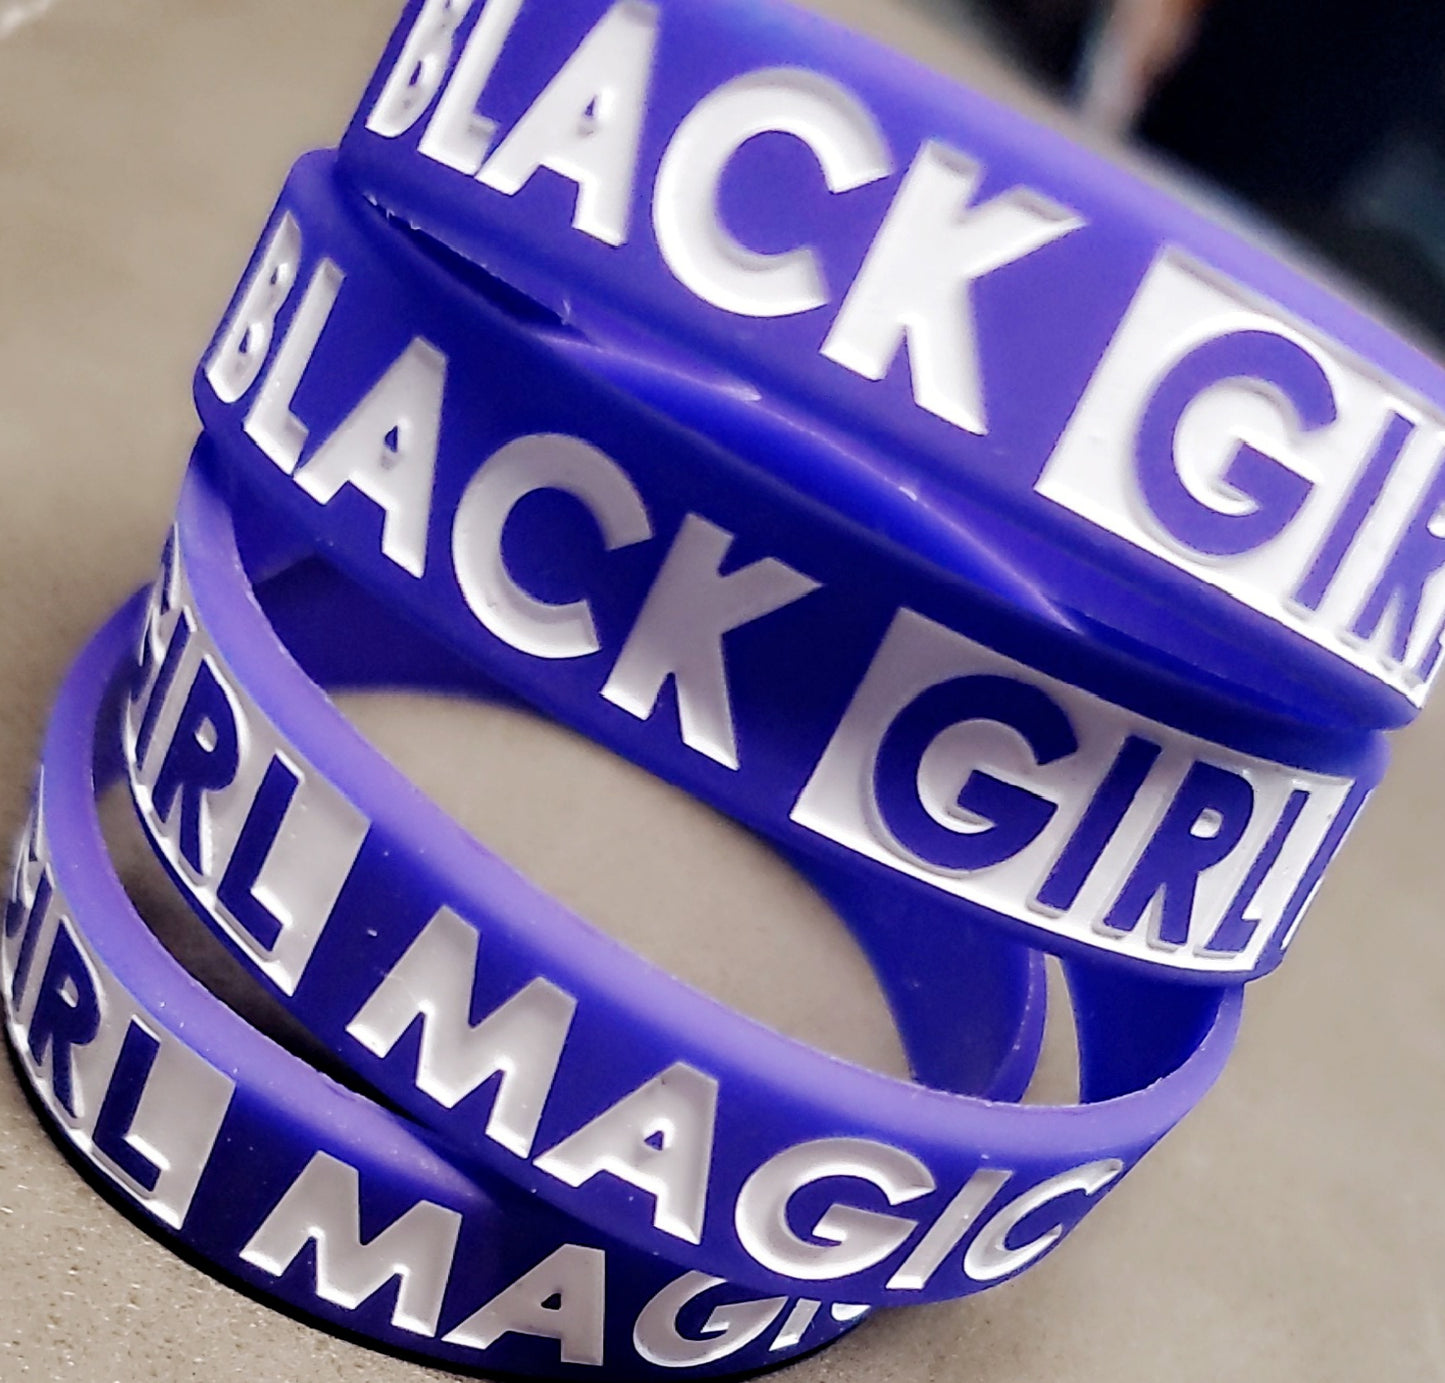 Black Girl Magic Wristbands!